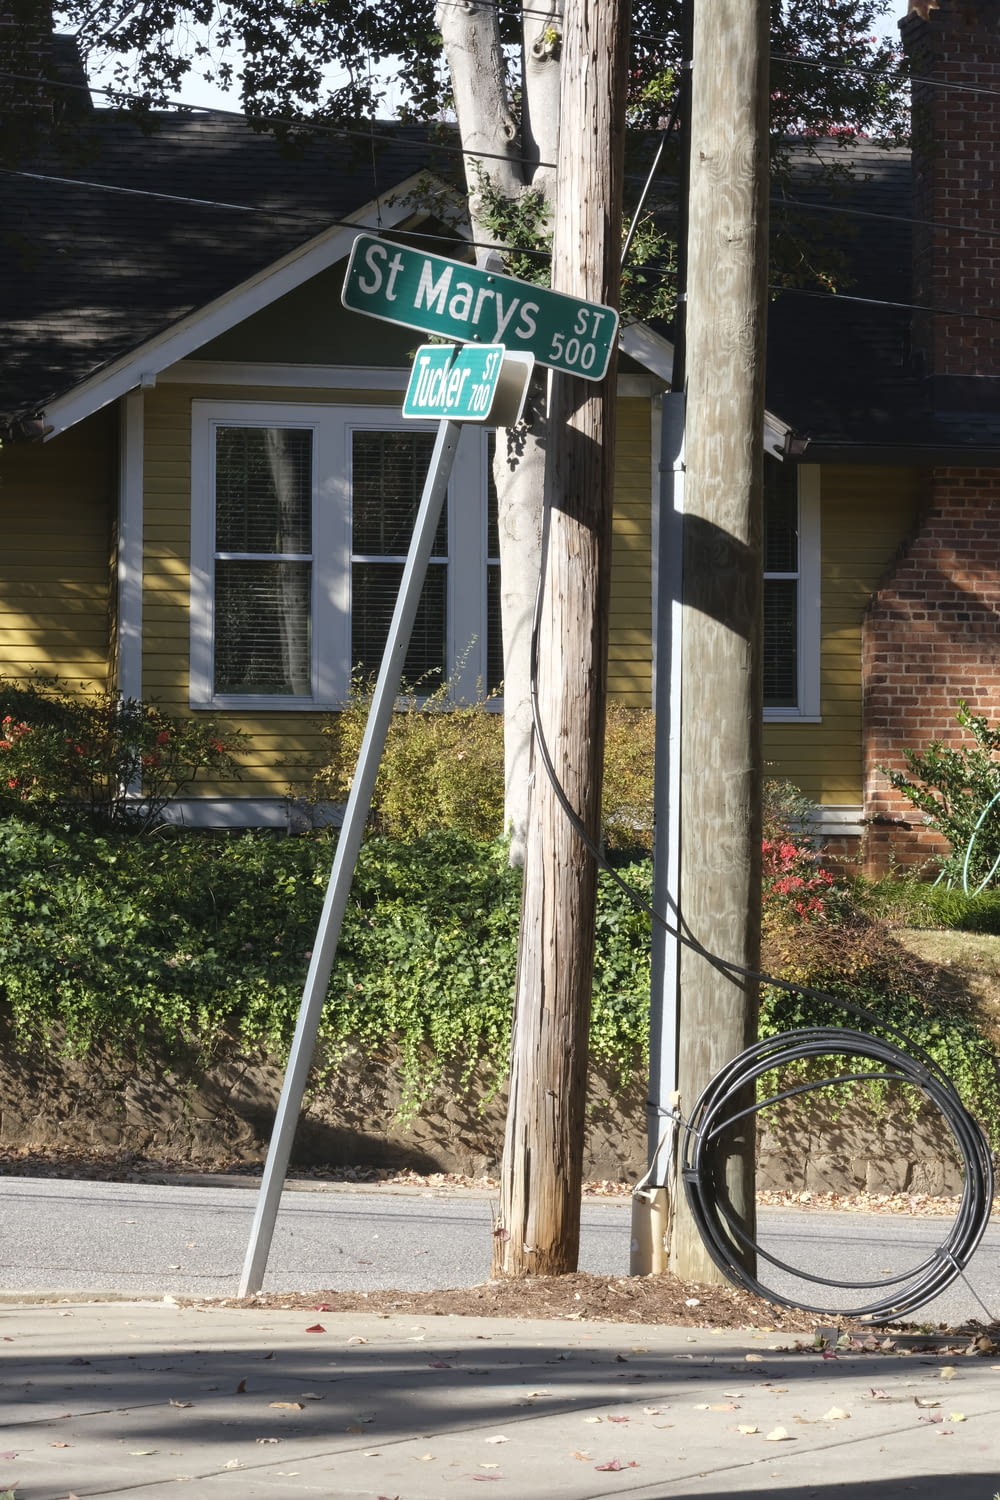 a street sign on a pole next to a tree